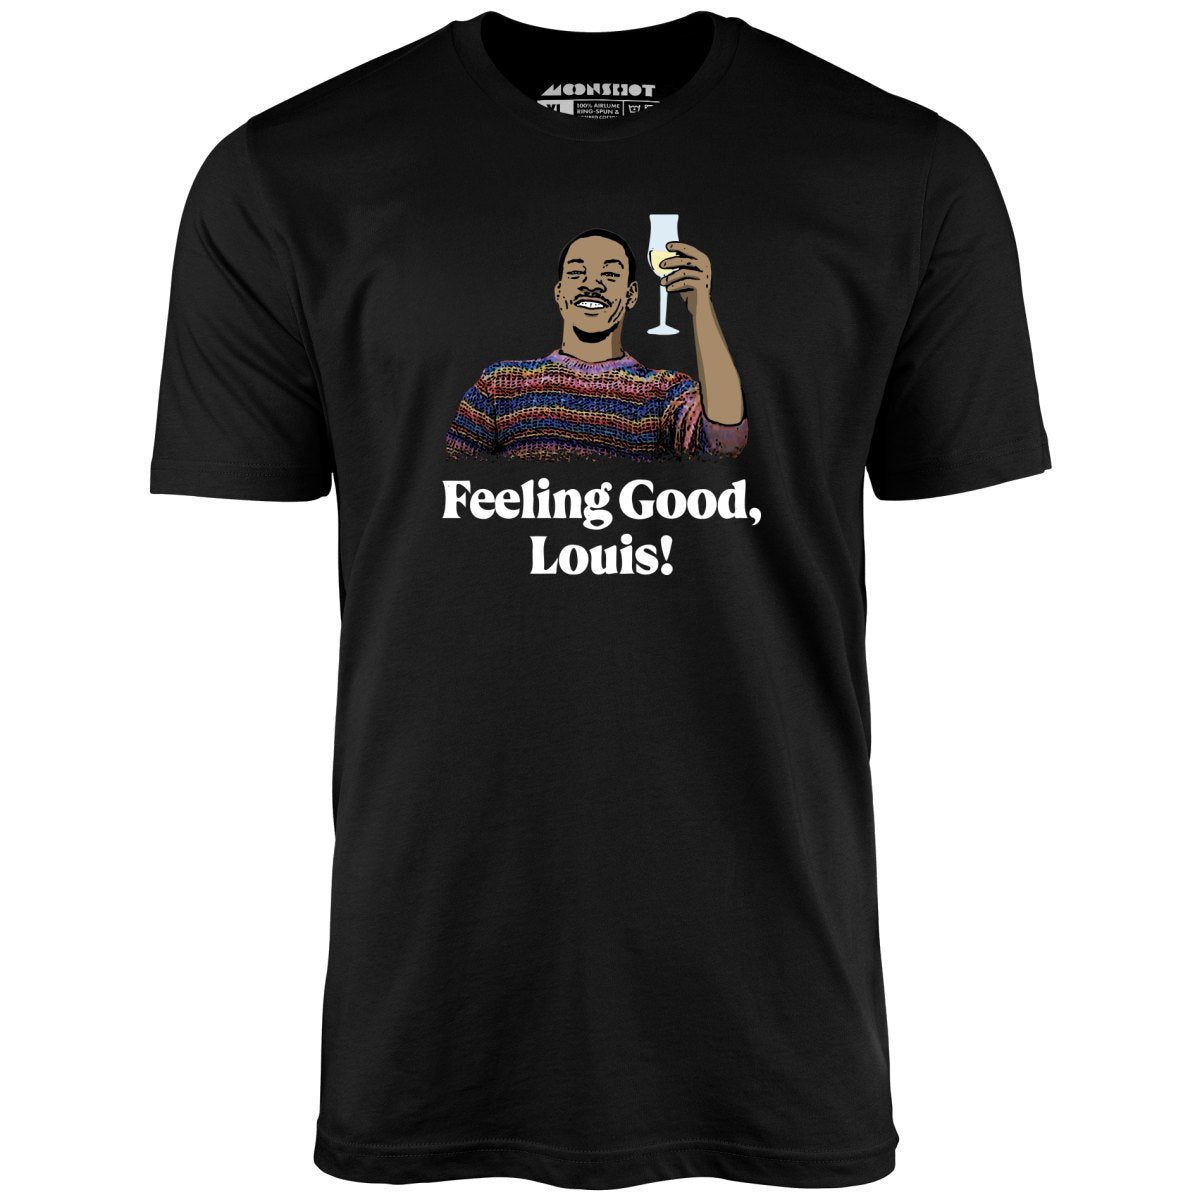 Feeling Good, Louis! - Unisex T-Shirt